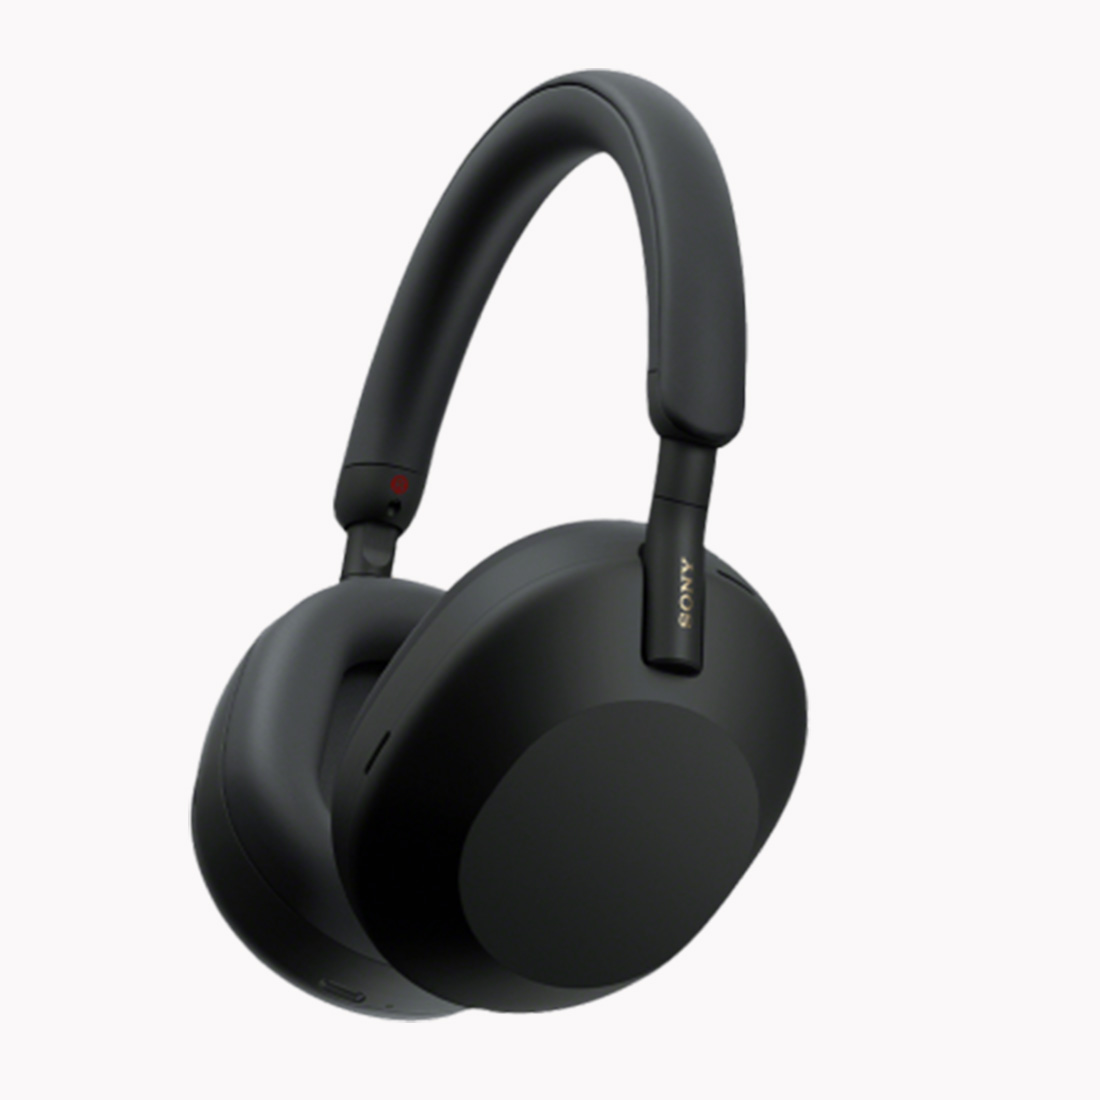 black over-ear headphones from sony